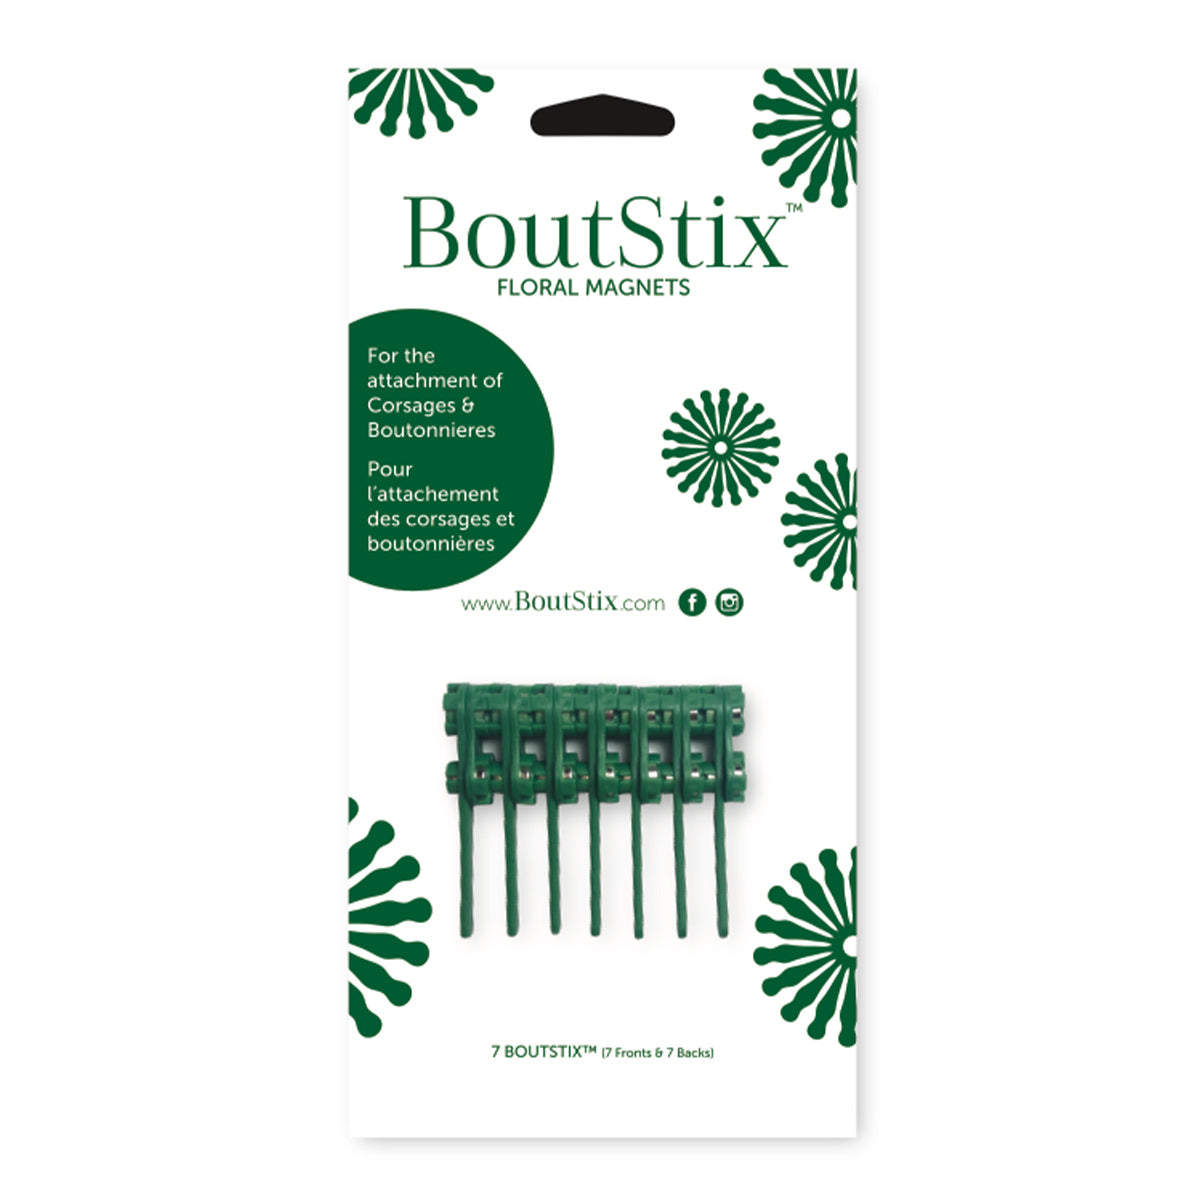 Boutstix Floral Magnets 2012 Corsages & Boutonnieres Set of 7 Front & Back for sale online